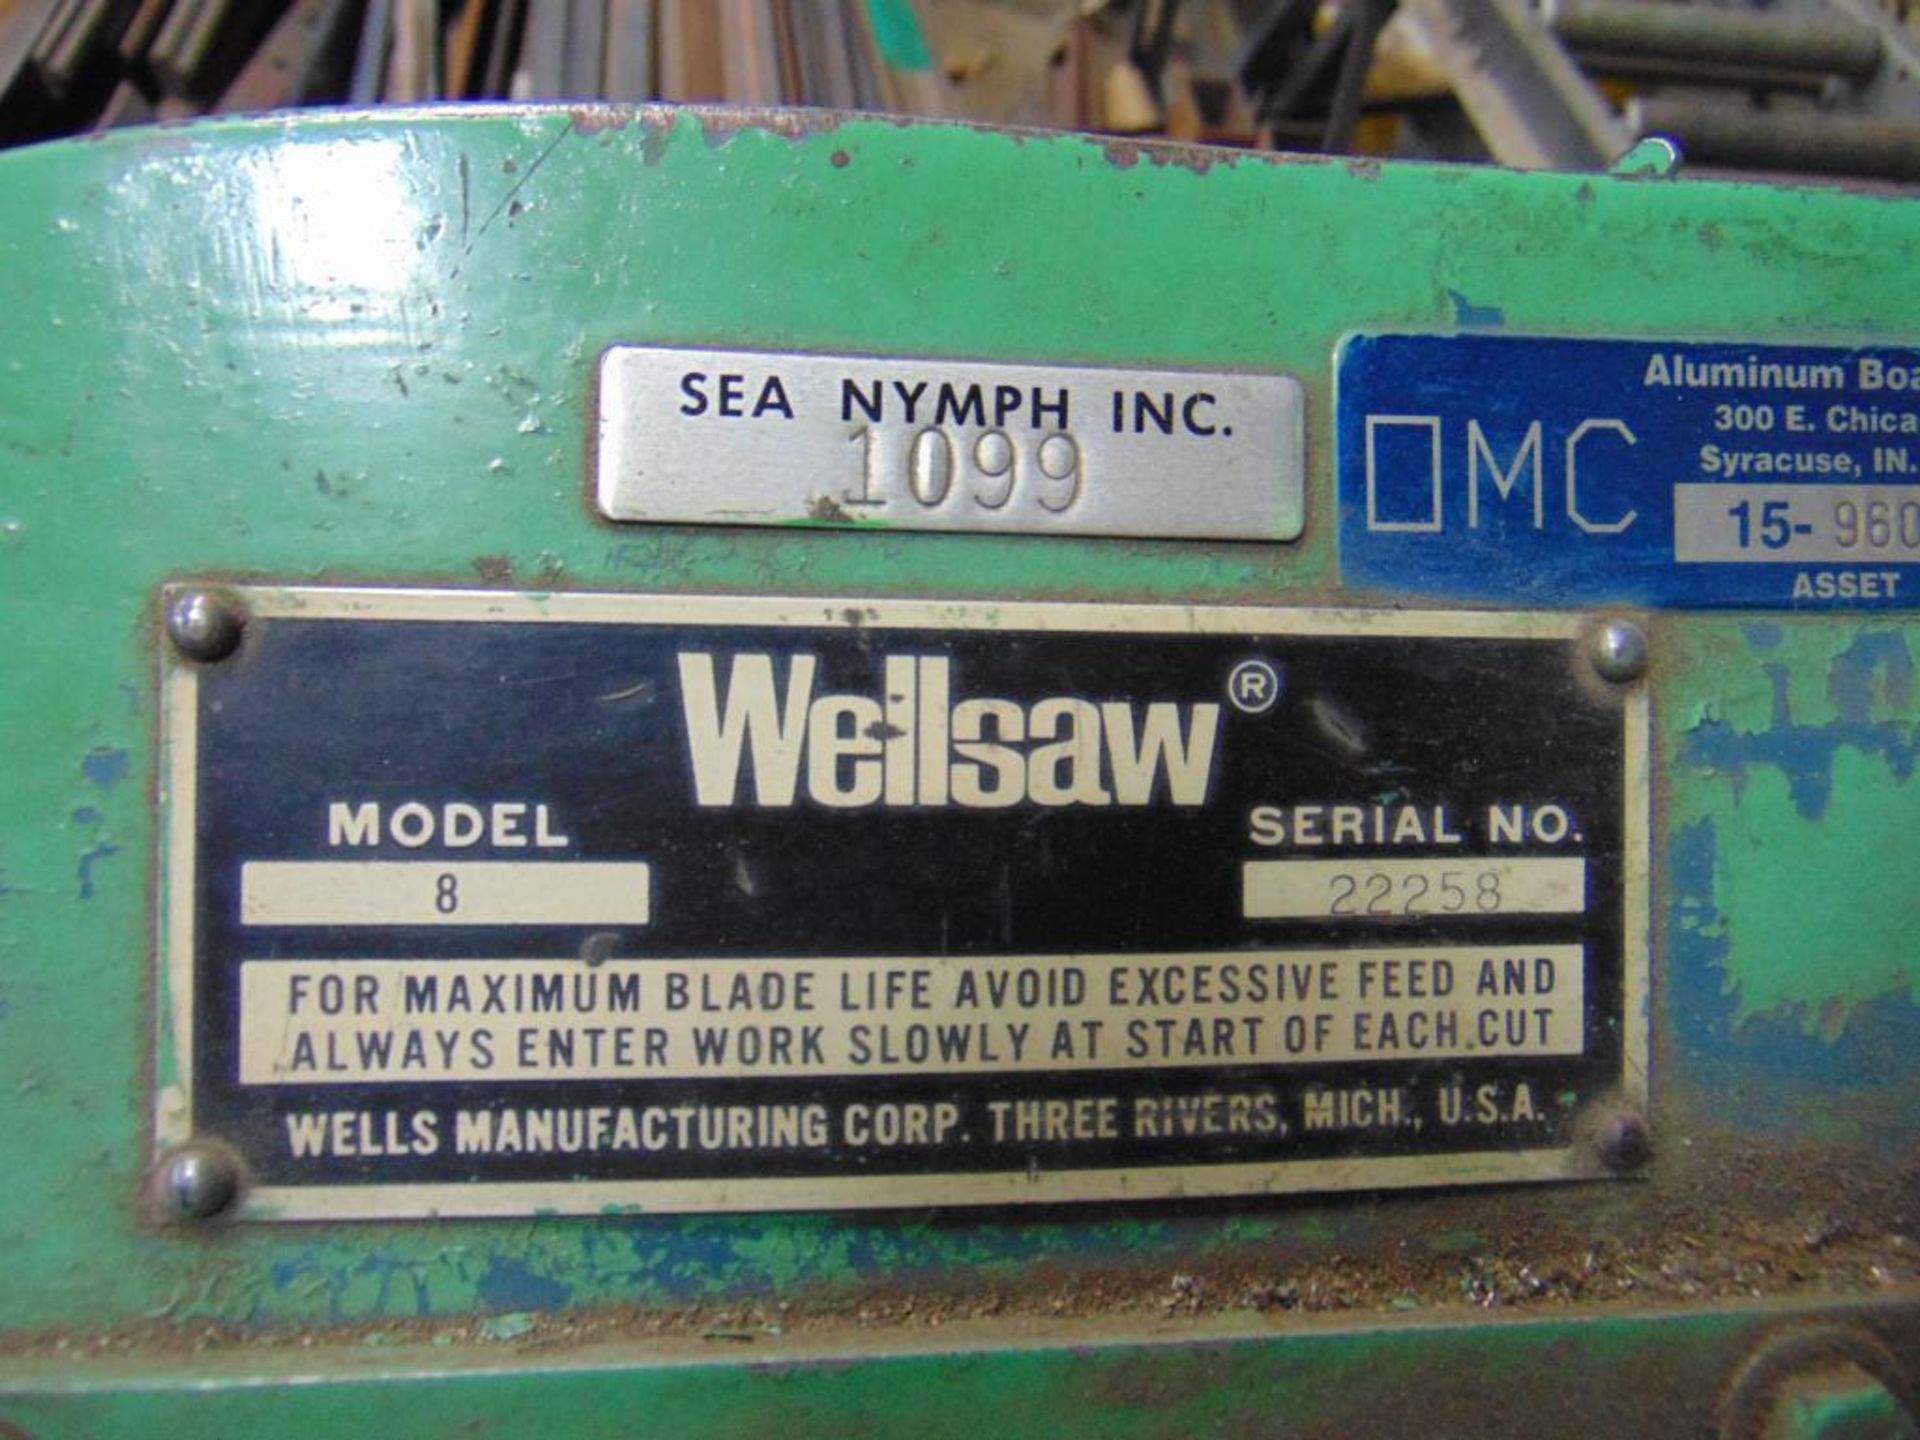 Wellsaw Model 8 Metal Band Saw - Image 5 of 5